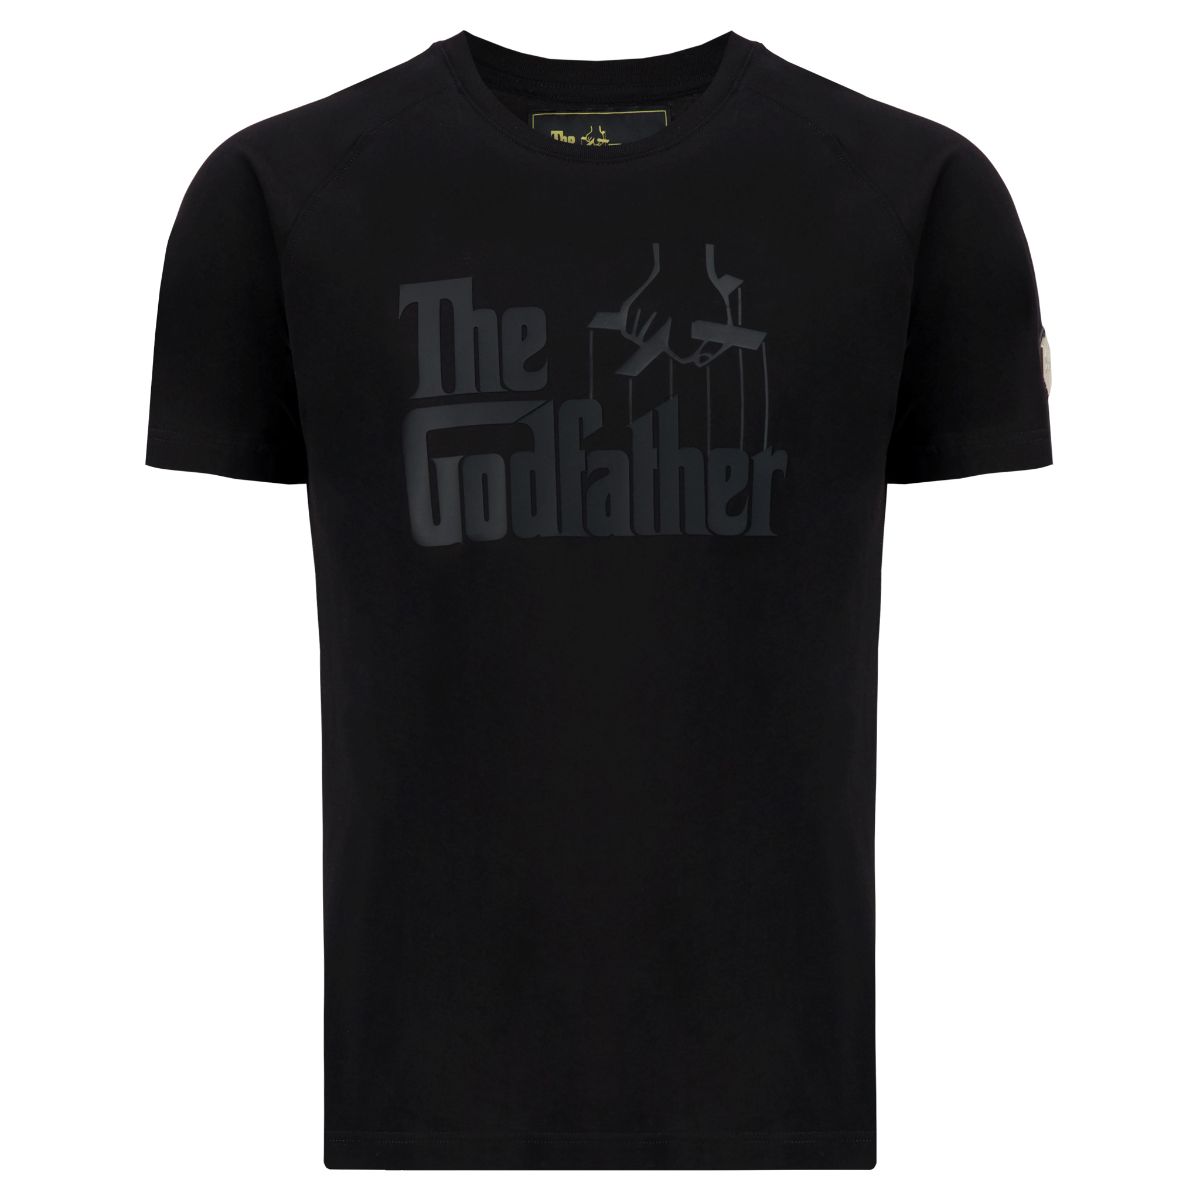 Gotstyle Fashion - Christopher Bates T-Shirts The Godfather T-Shirt - Black/Black